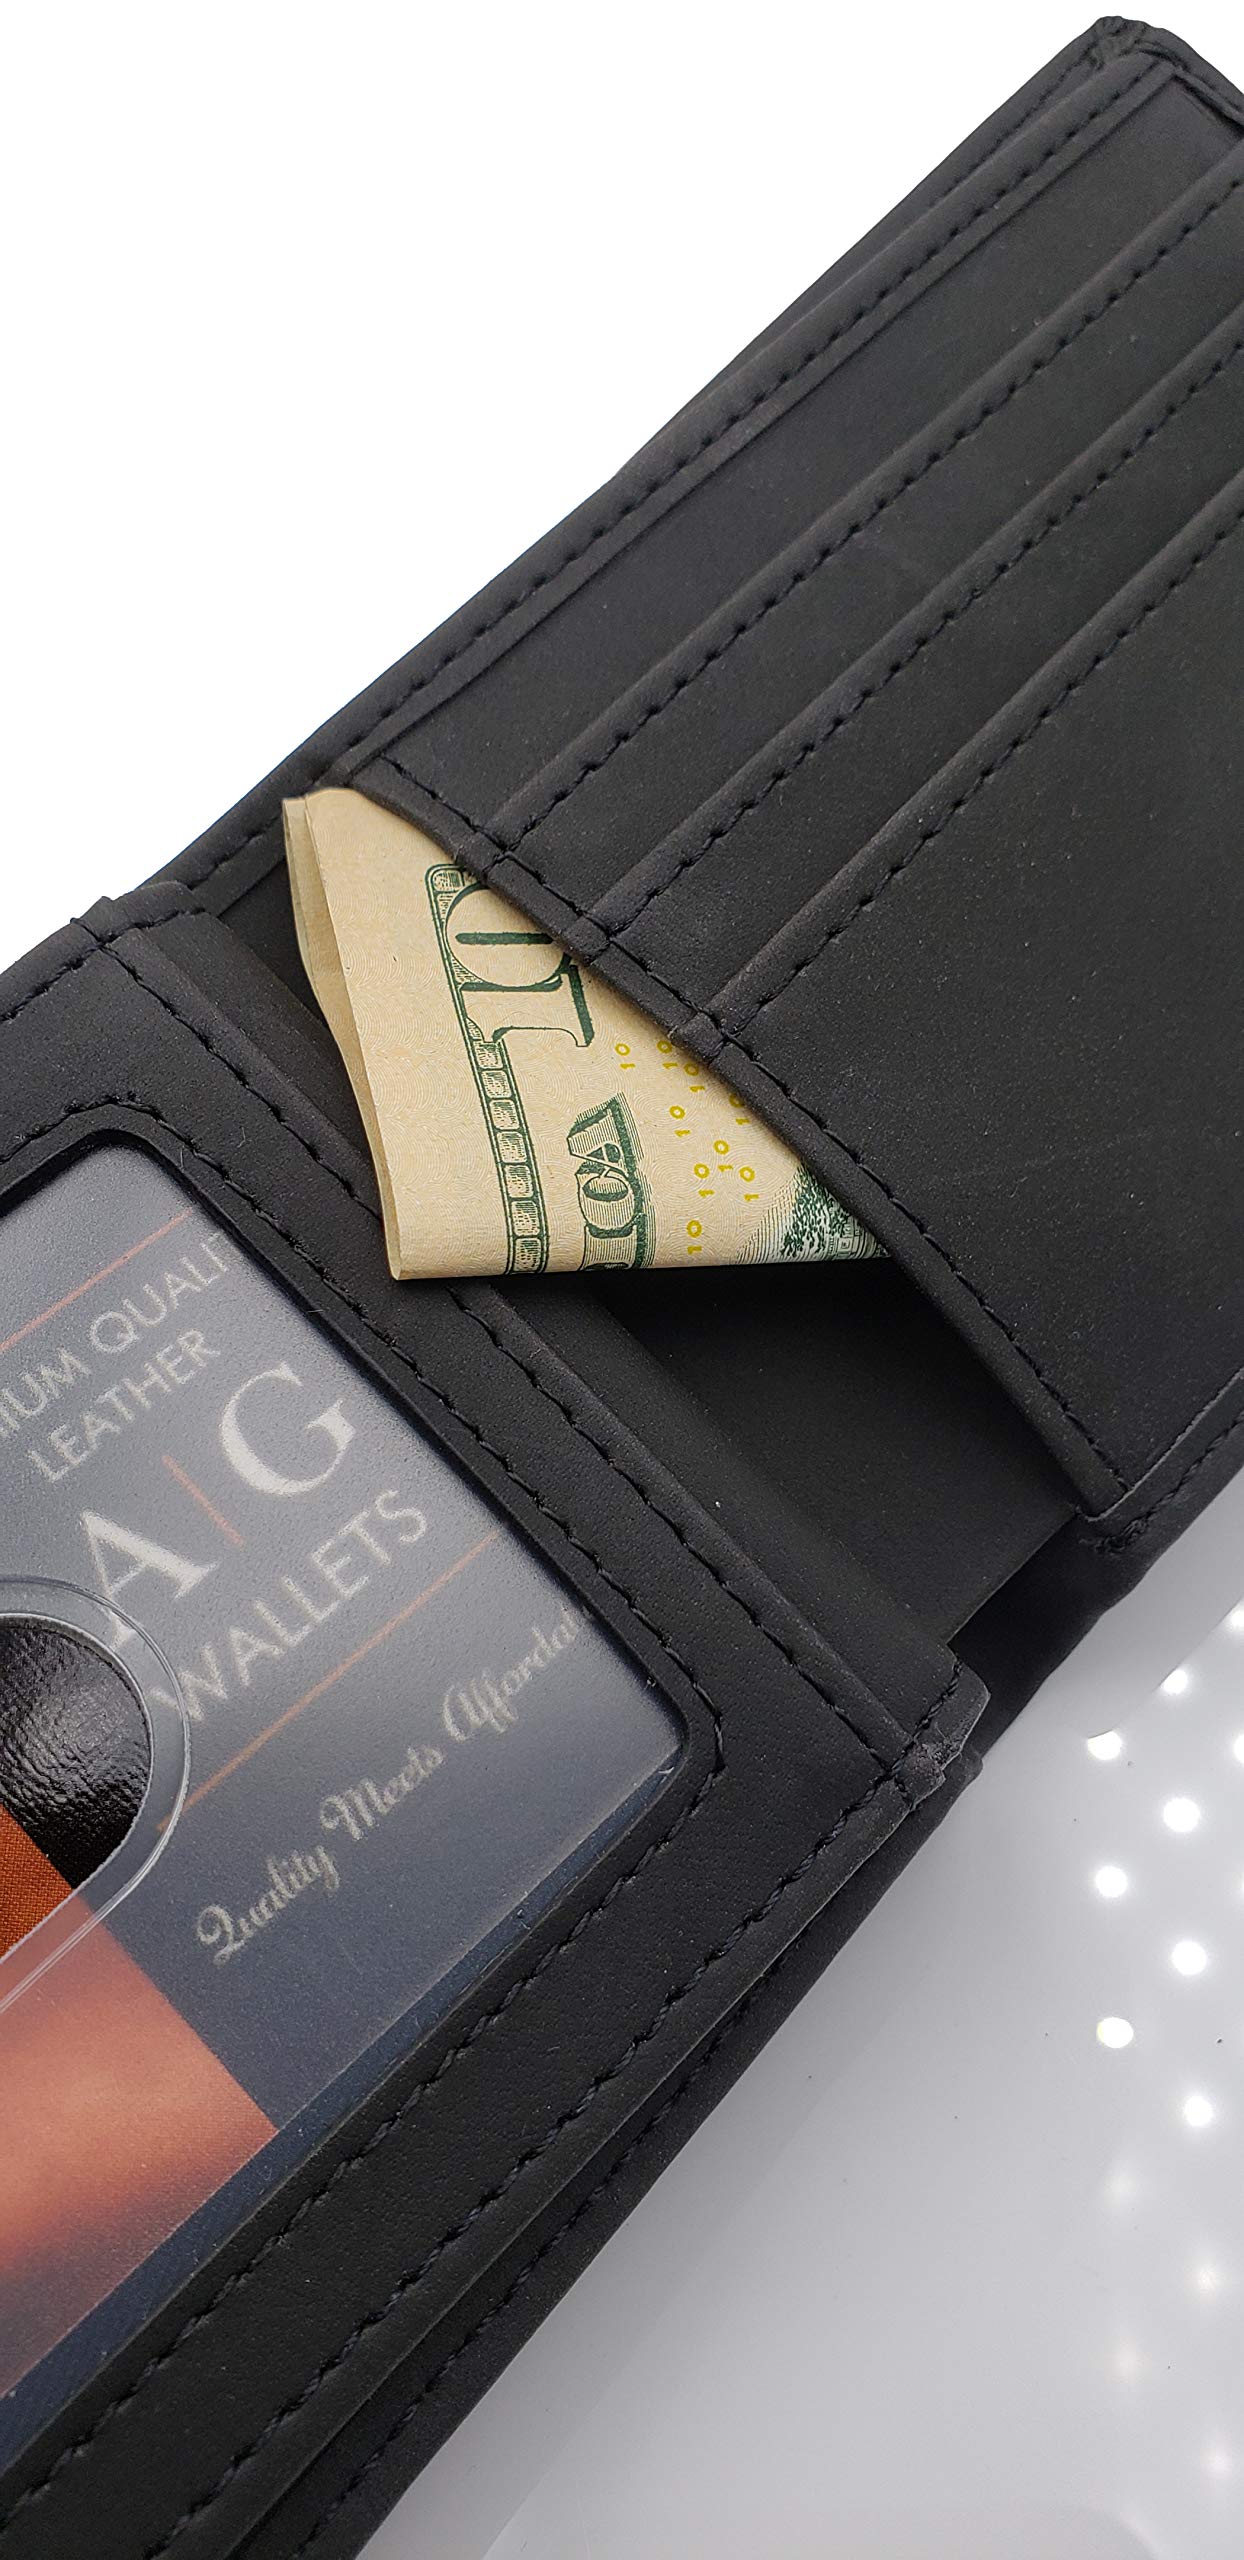 ag wallets Mens Vegan Leather Bifold Wallet, RFID Protection, Faux Leather Credit Card Holder (Center Flap Black)